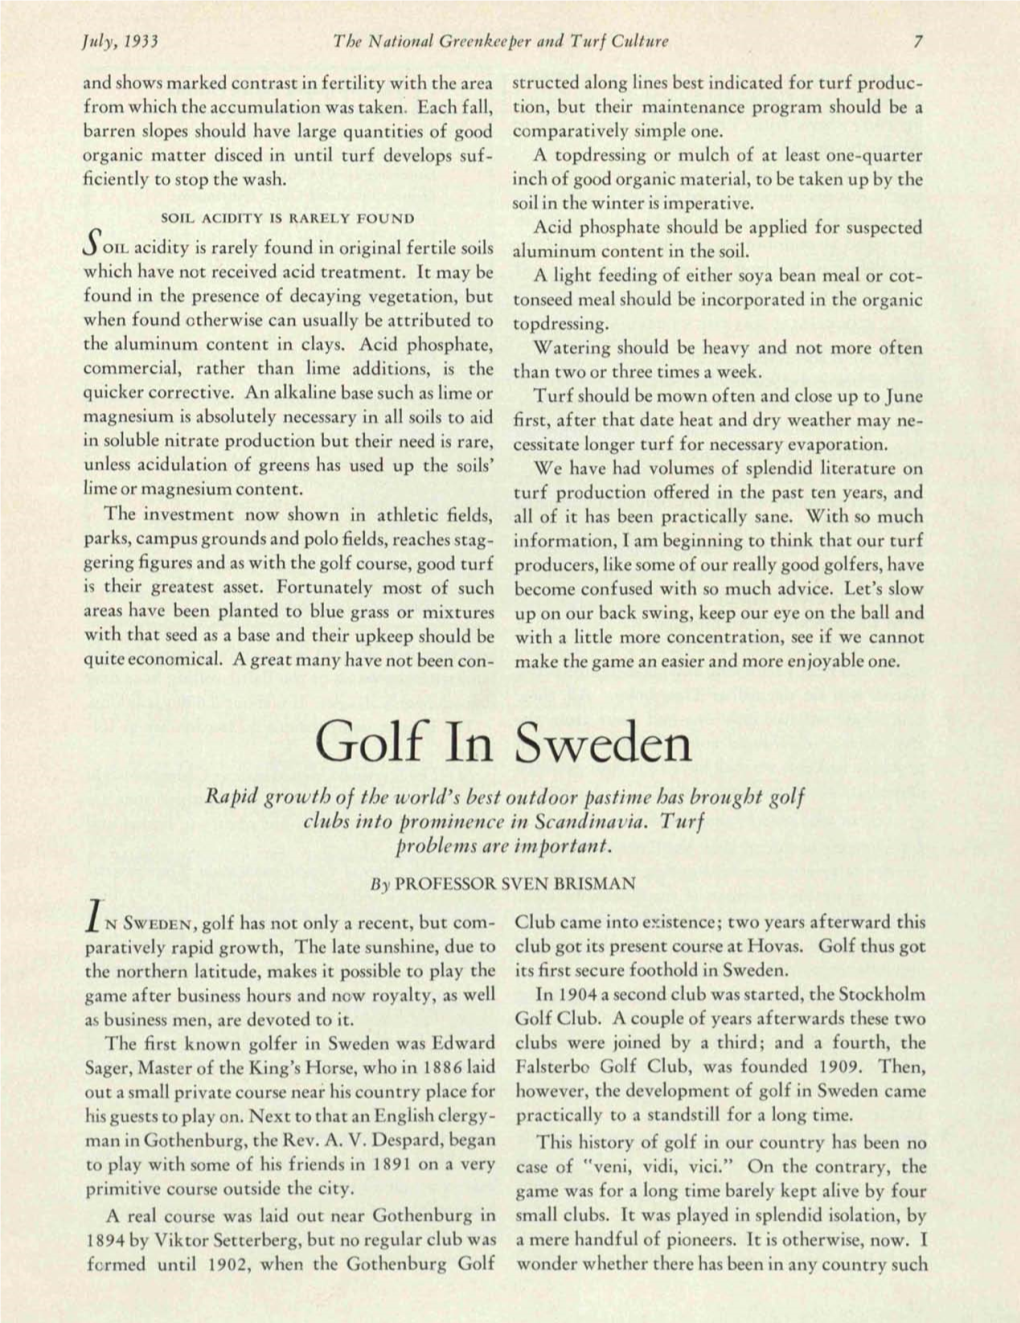 Golf in Sweden Rapid Gro'zvtb of Tbe 'World's Best Outdoor Pasthue Bas Brougbt Golf Clubs Into Pr0'/11Jnencein Scandinavia